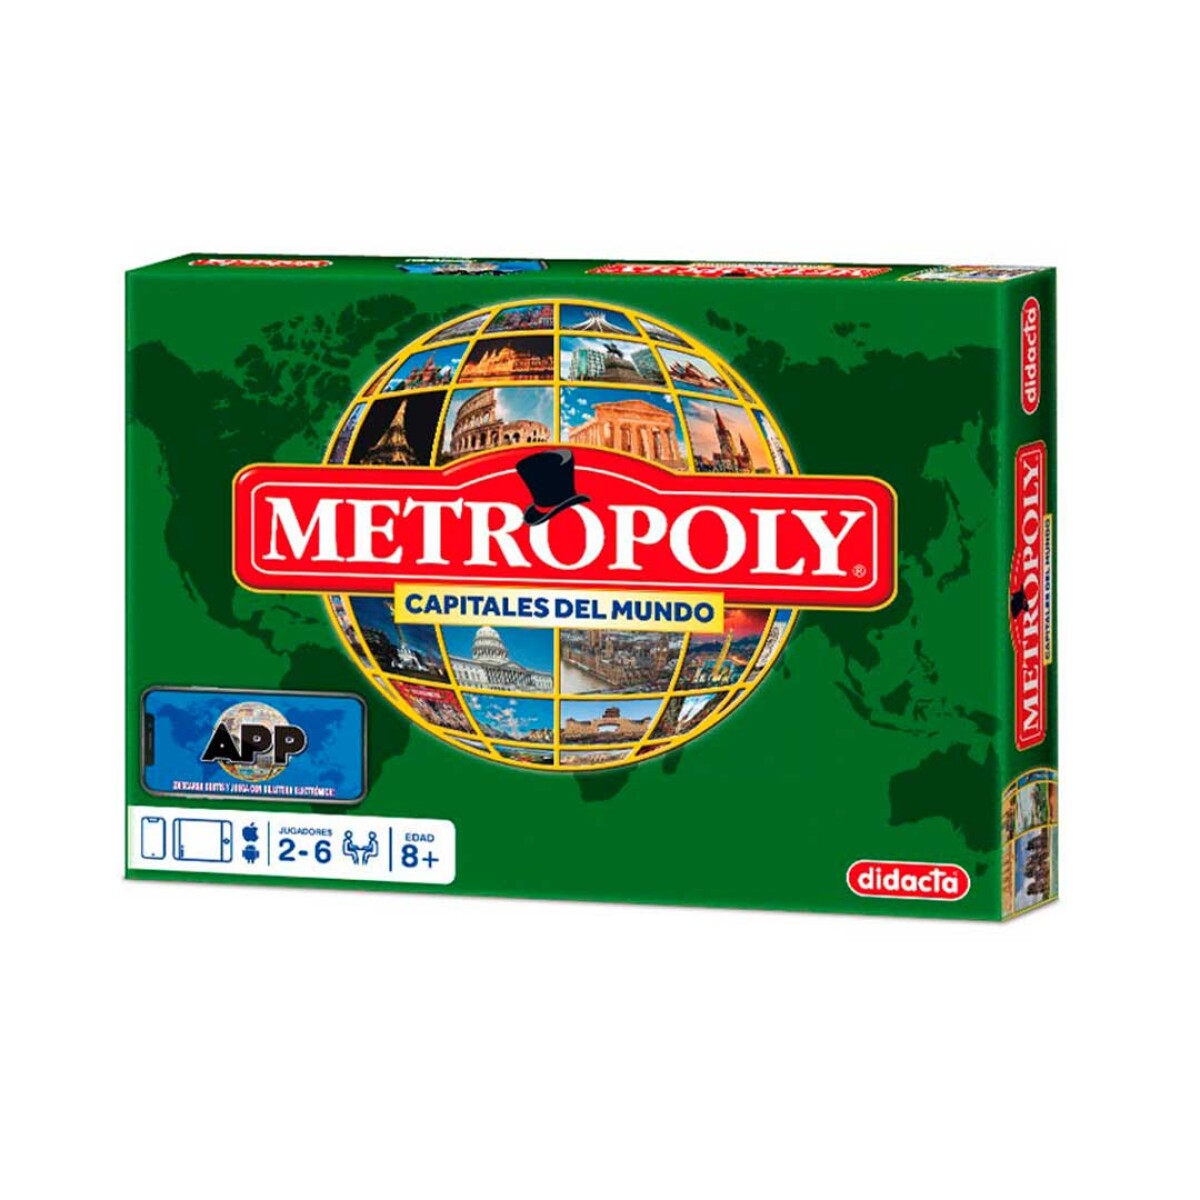 Juego de mesa Metropoly Capitales del mundo Didacta - 001 